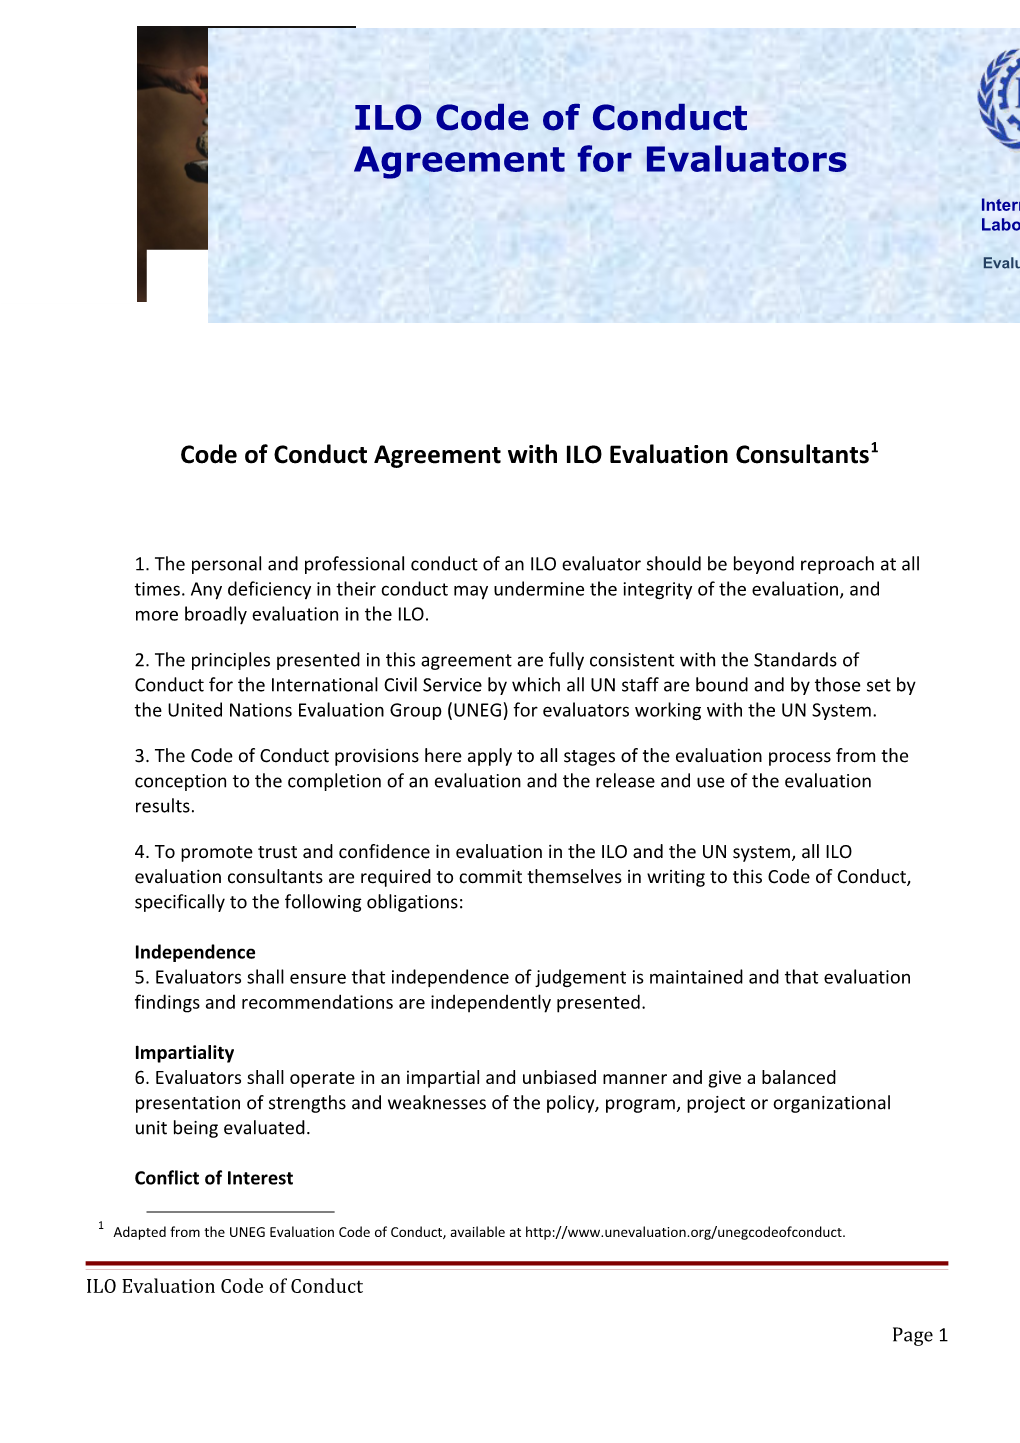 ILO Evaluation Code of Conductpage 1